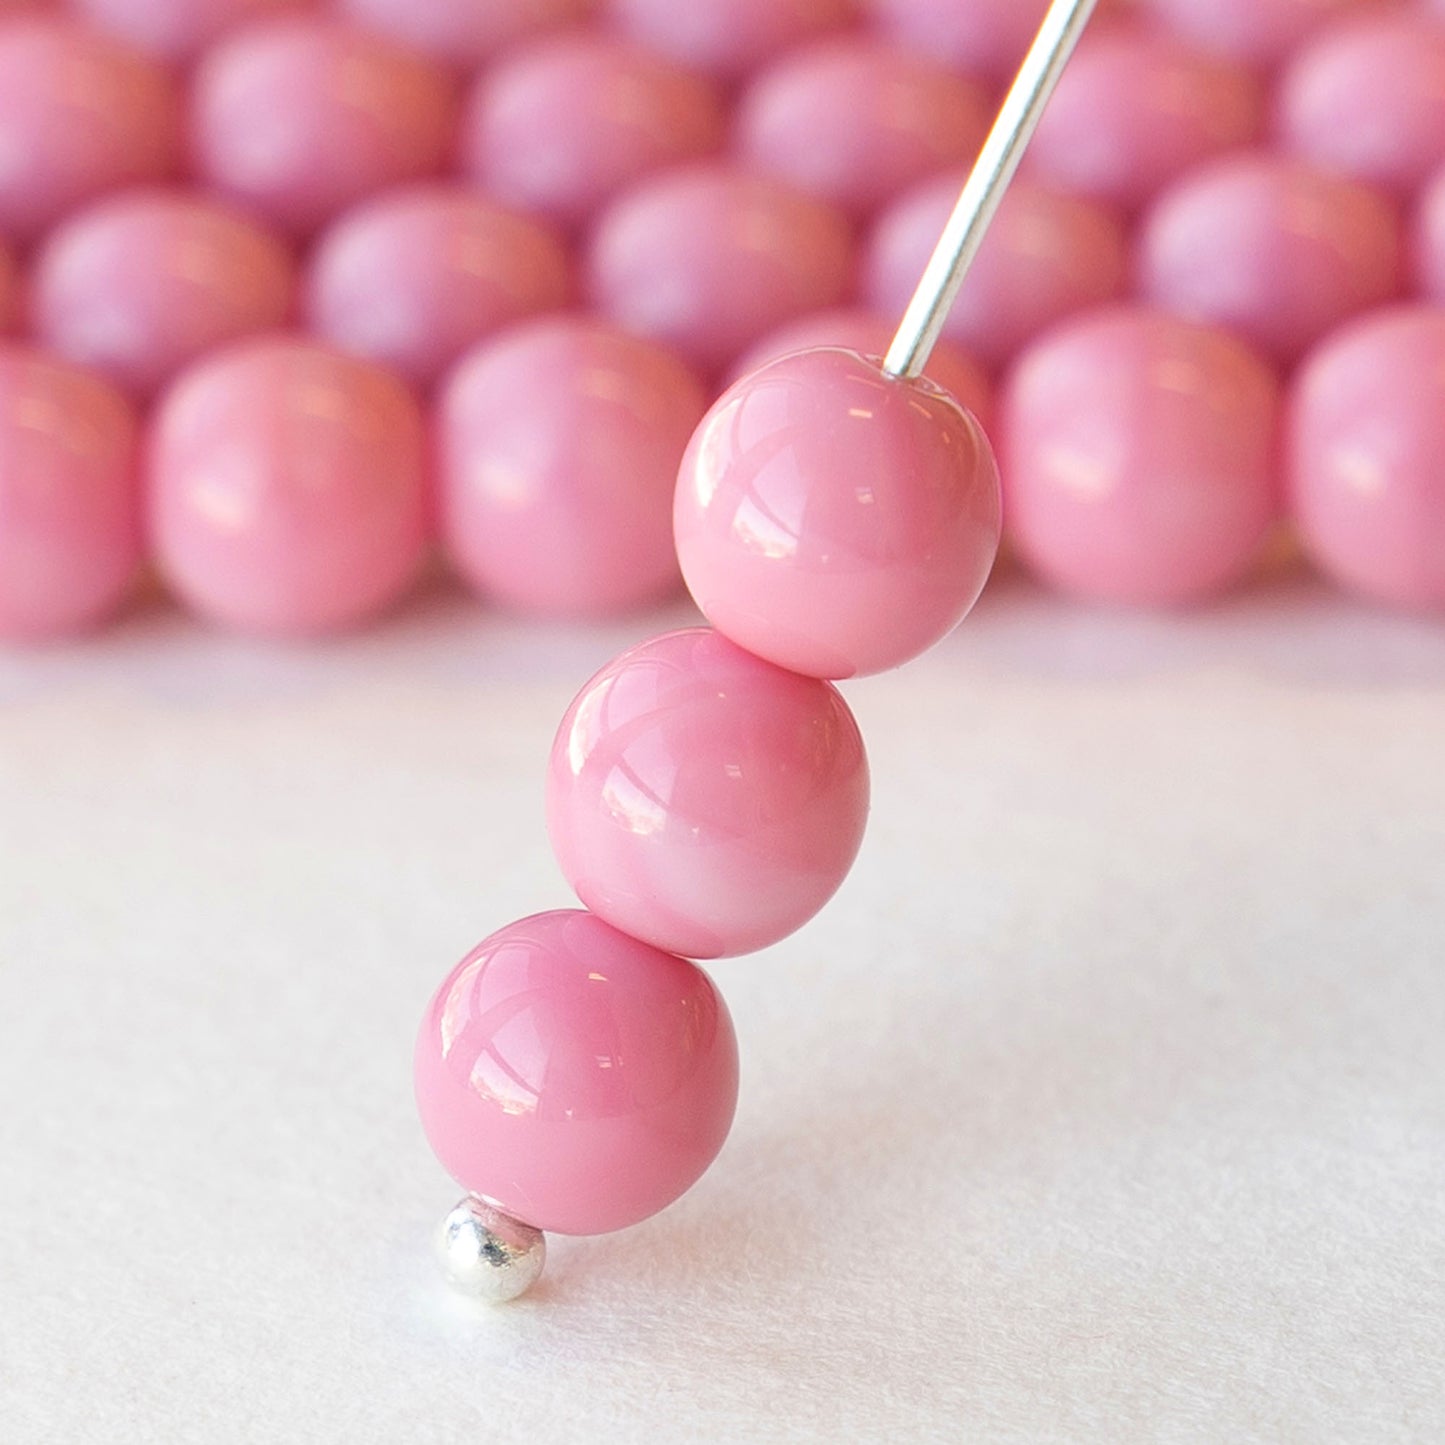 6mm Round Glass Beads - Pink - 20 Beads